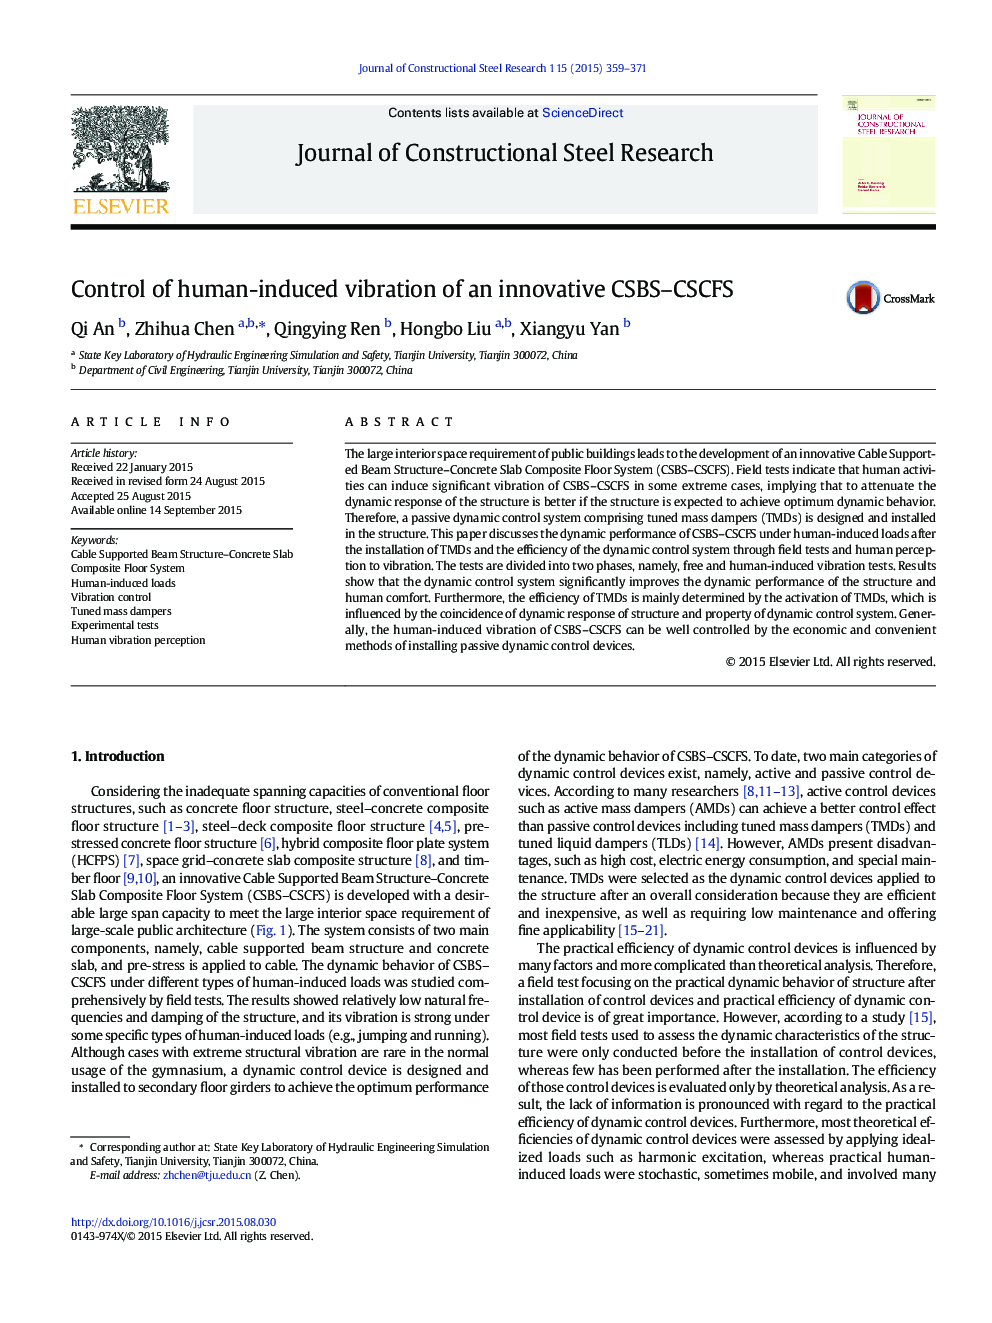 Control of human-induced vibration of an innovative CSBS–CSCFS